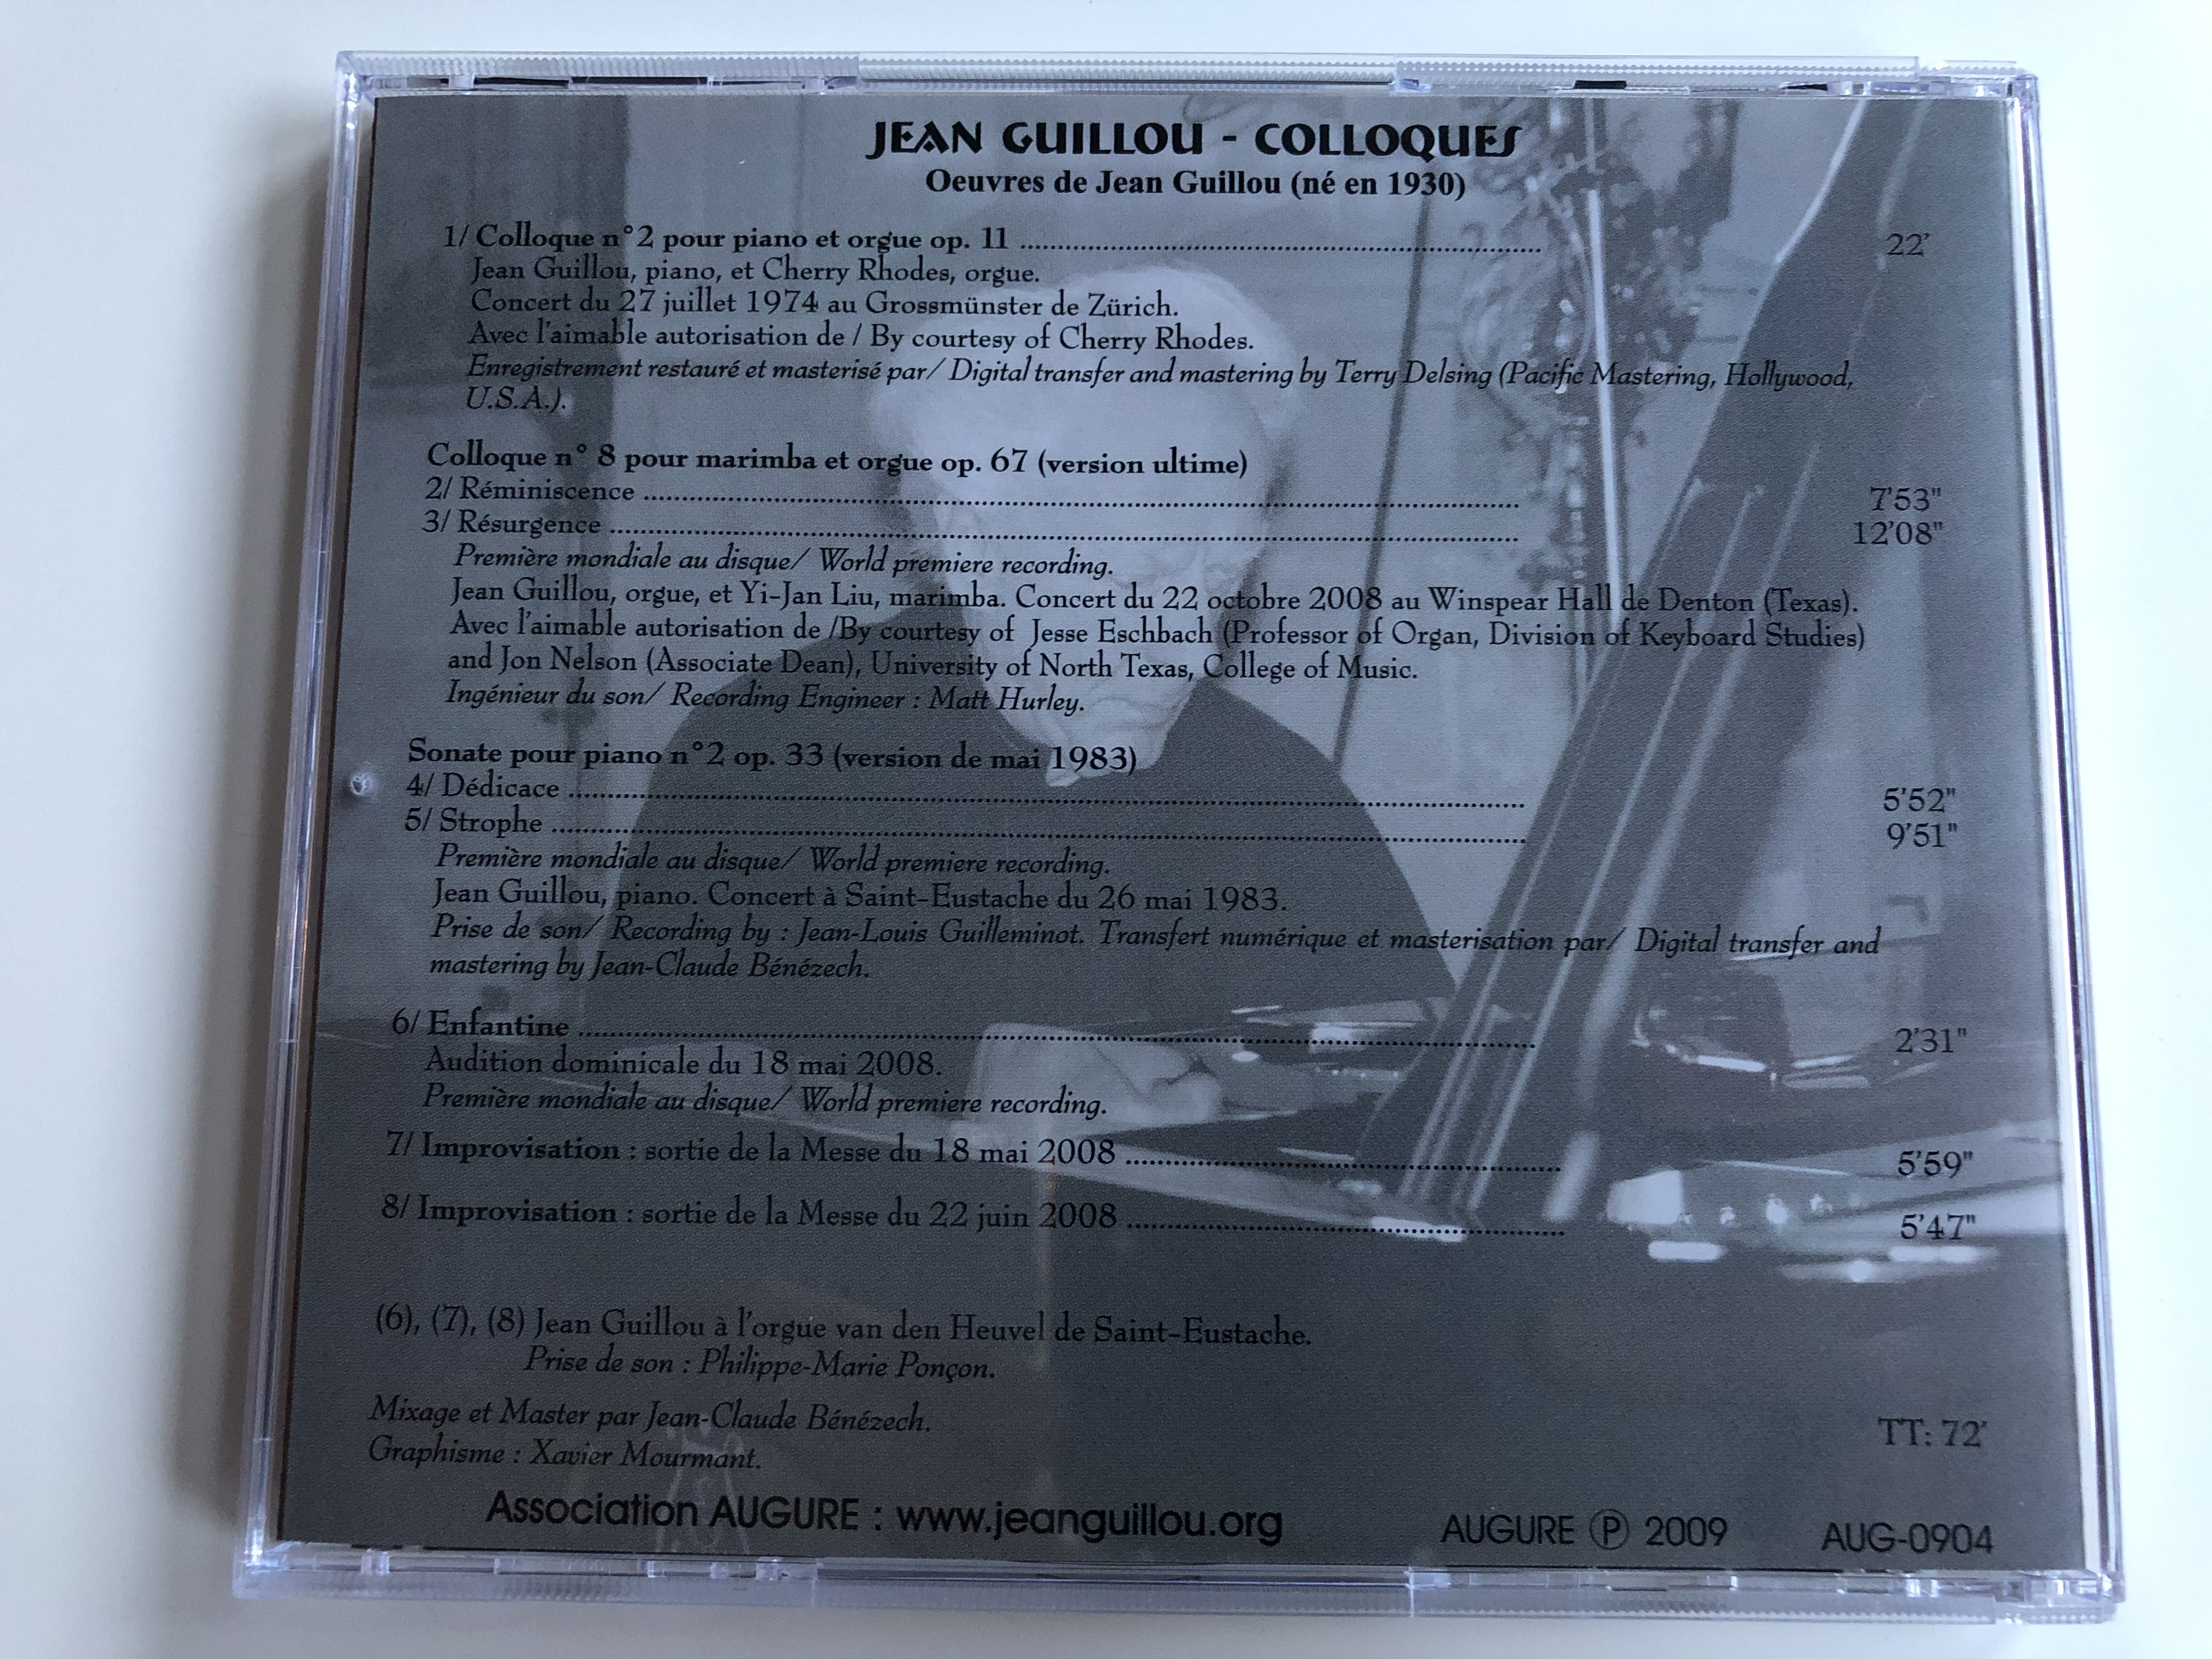 jean-guillou-colloques-jean-guillou-piano-orgue-cherry-rhodes-orgue-yi-jan-liu-marimba-world-premiere-recordings-augure-audio-cd-2009-aug-0904-10-.jpg